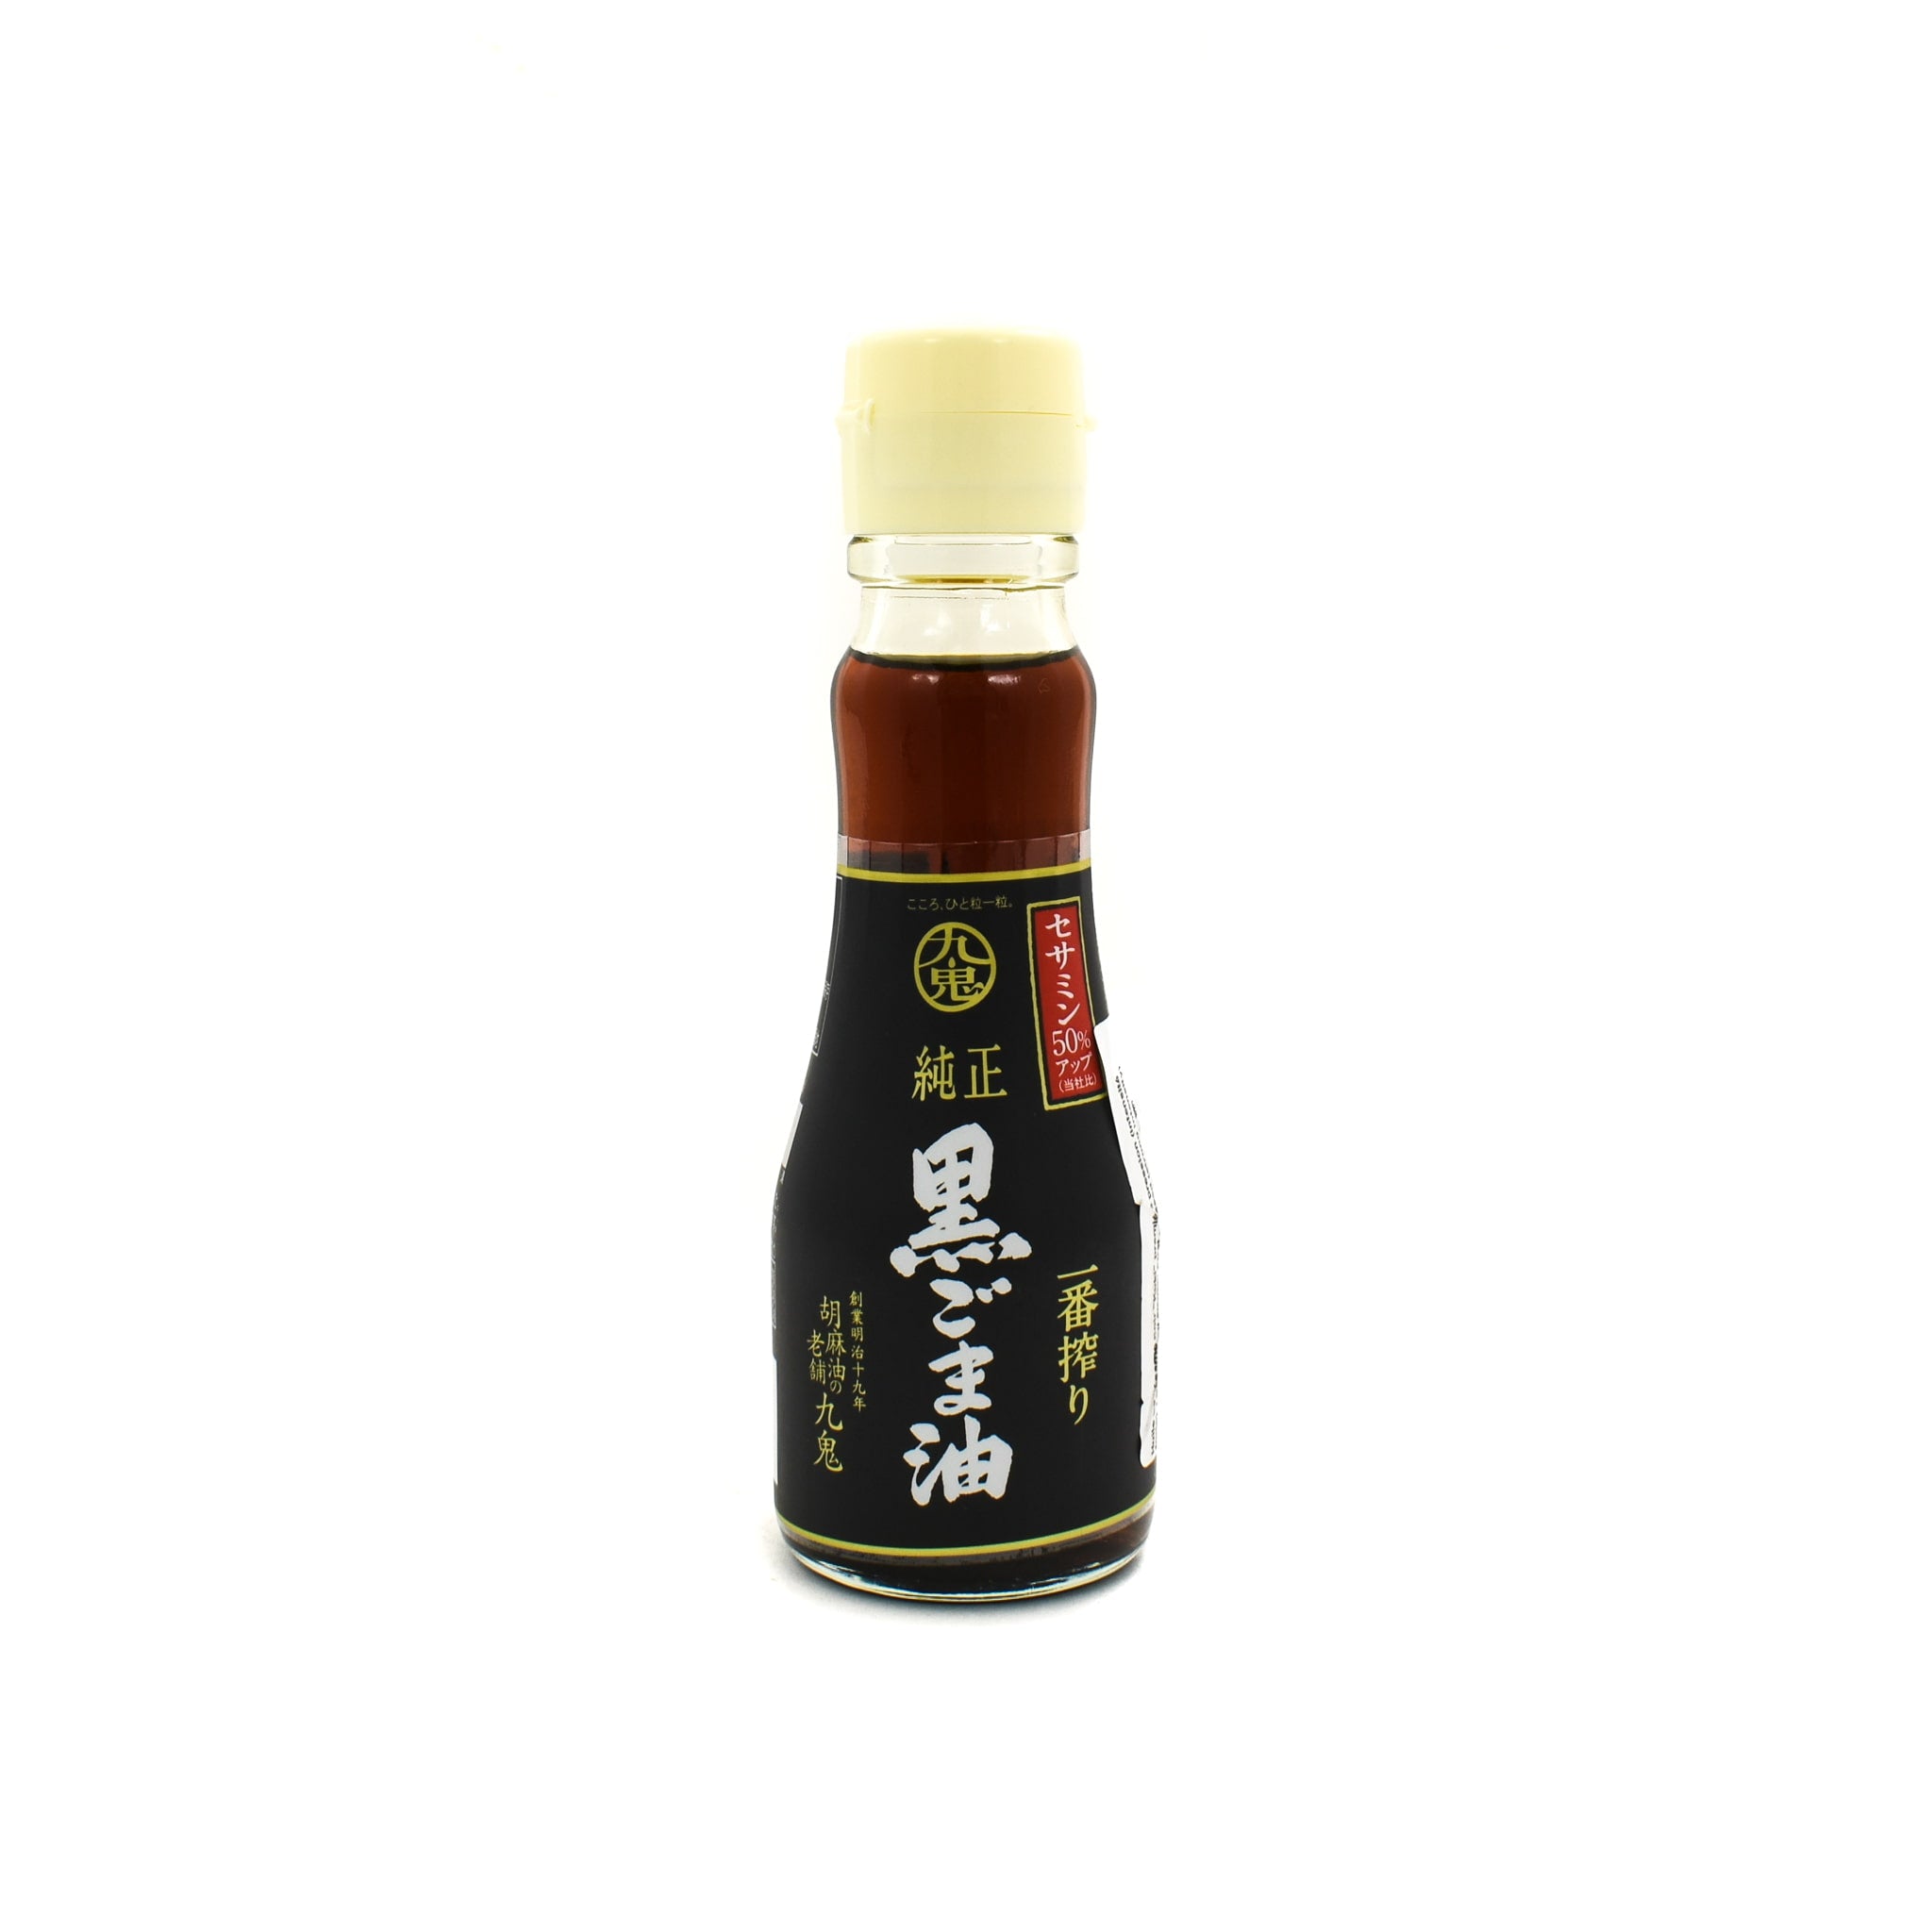 Kuki Sangyo "First Press" Intense Black Sesame Oil 150g